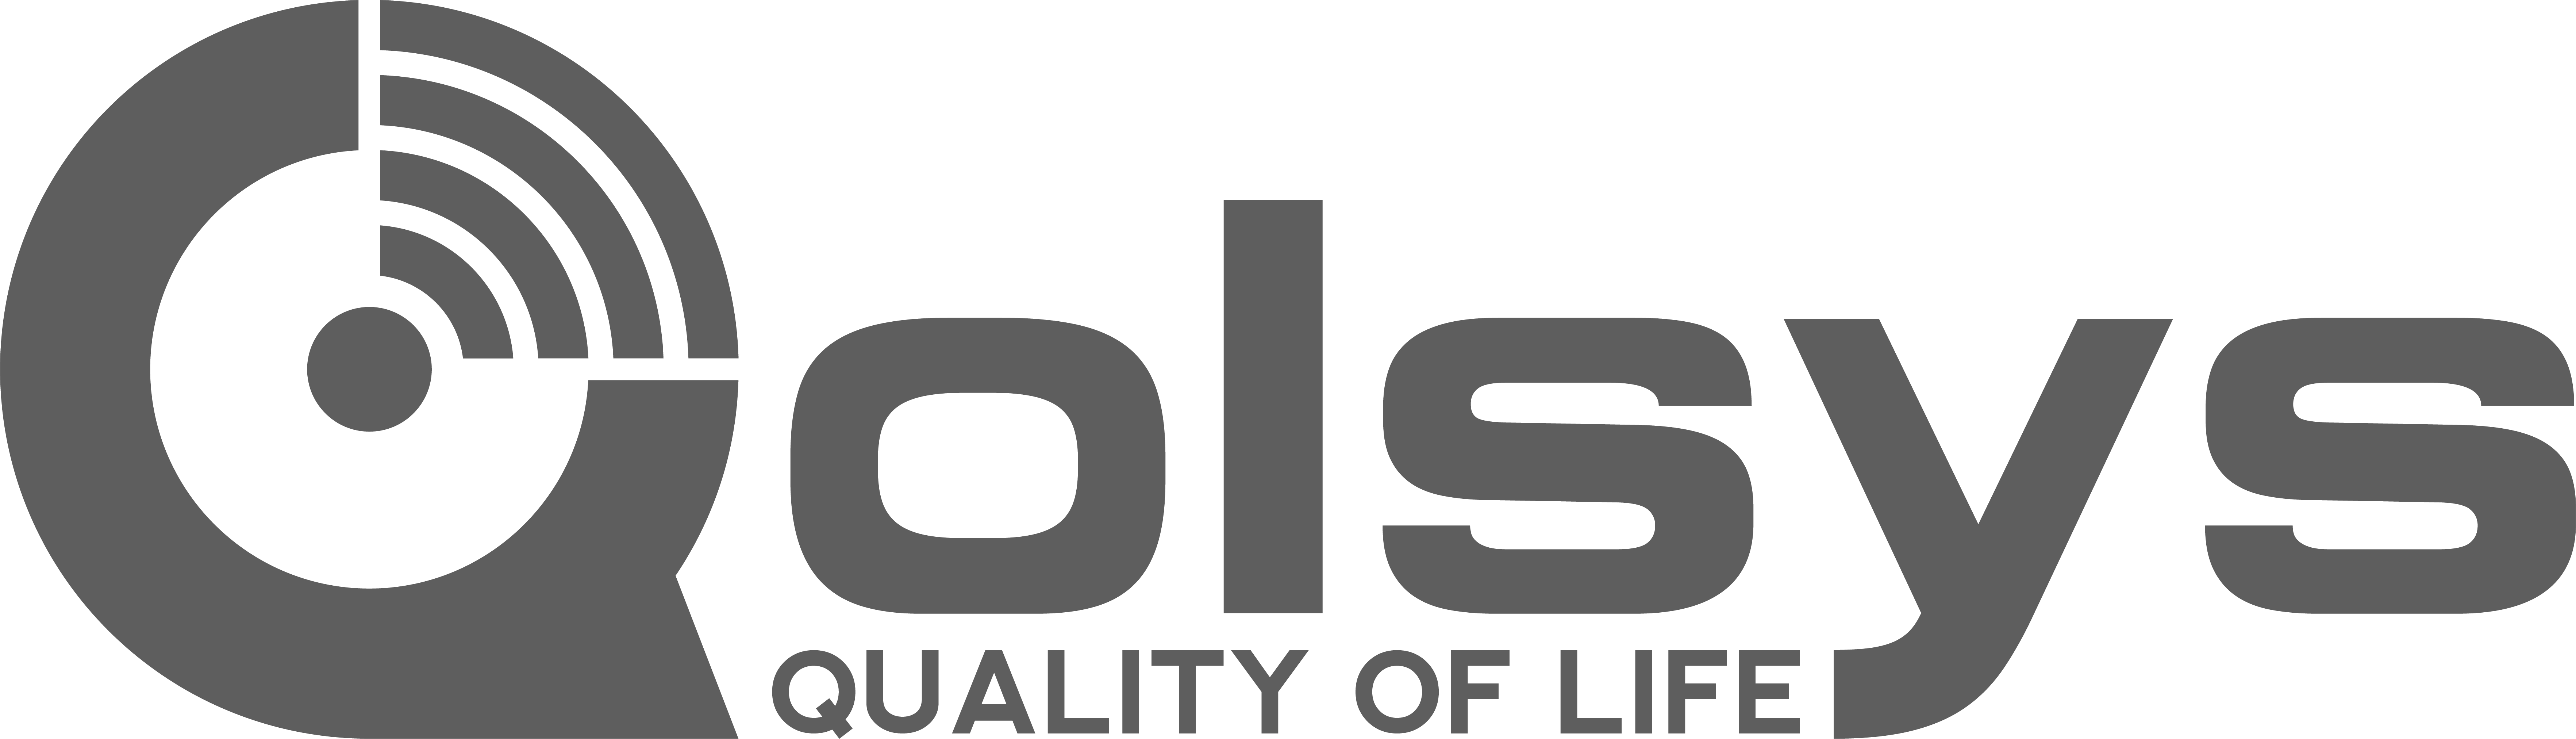 Qolsys-Logo-Grey-large